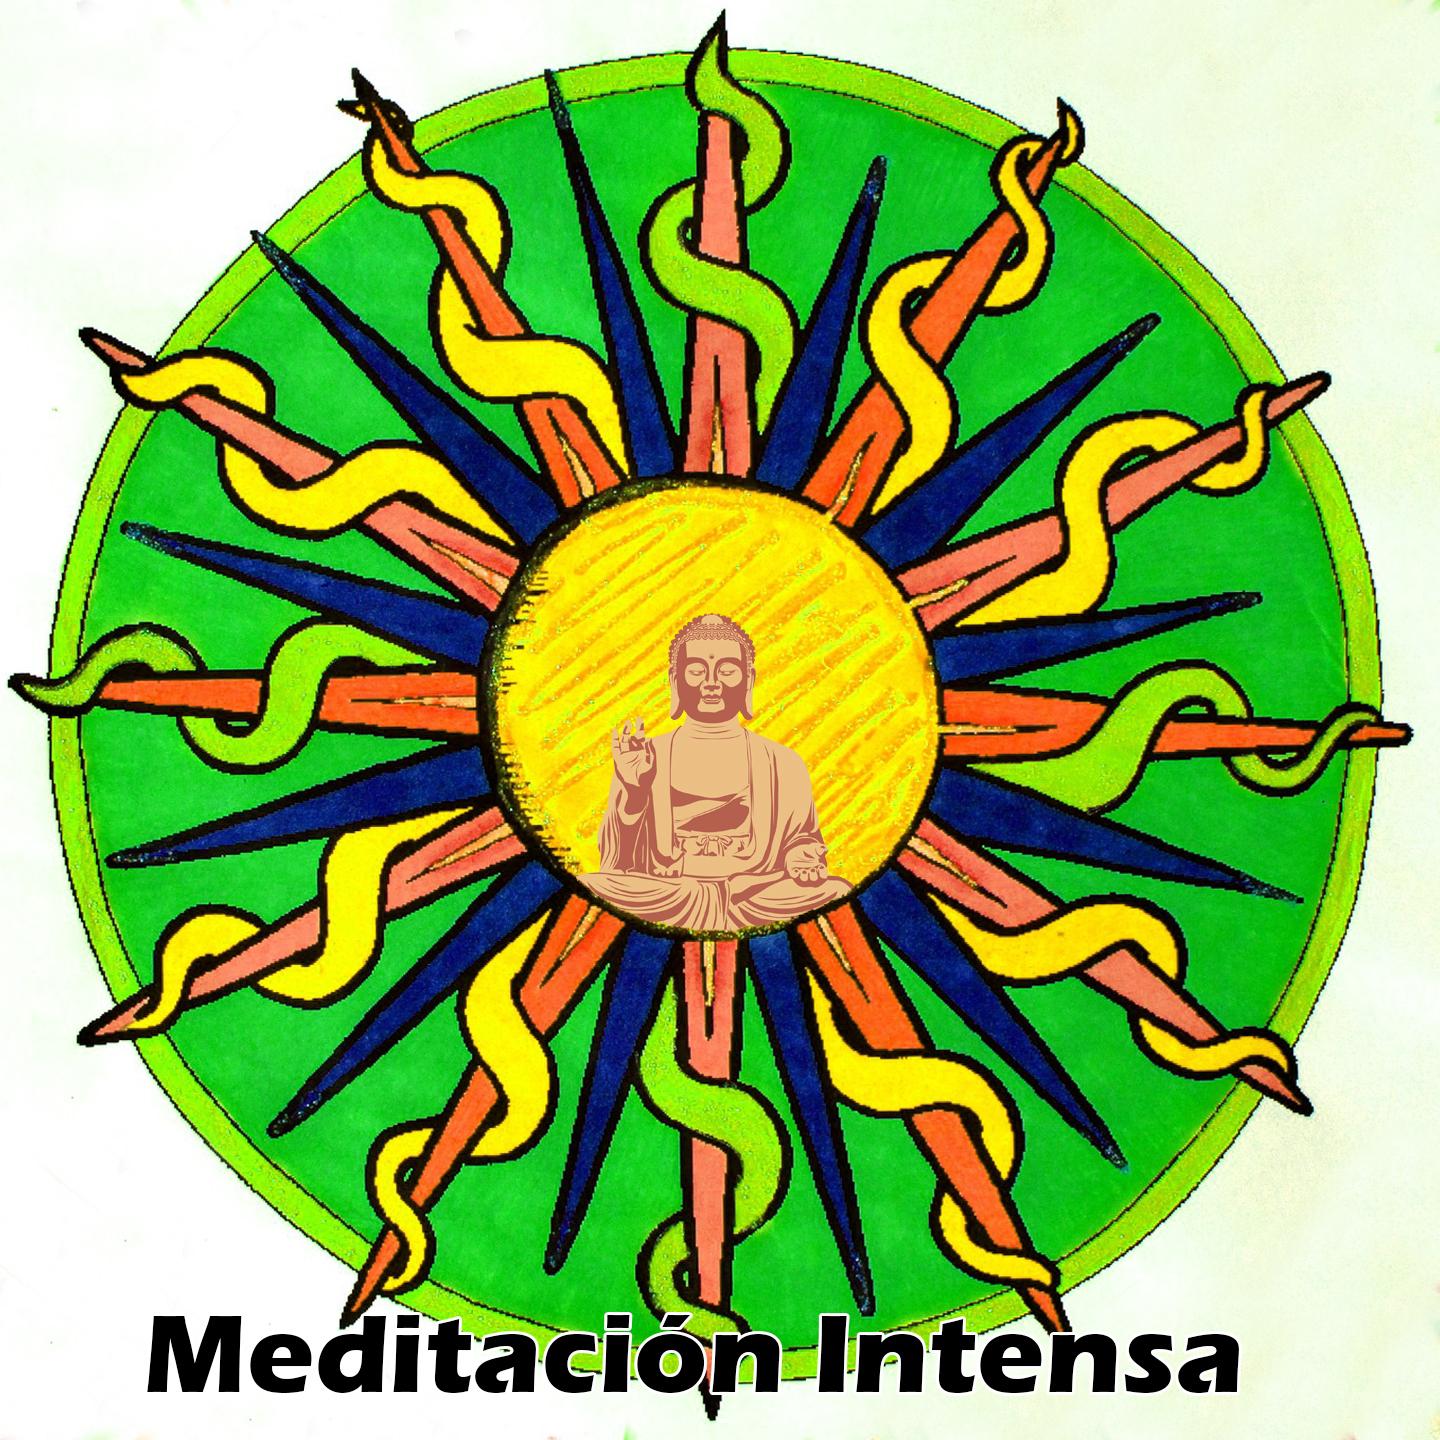 Meditacio n Intensa